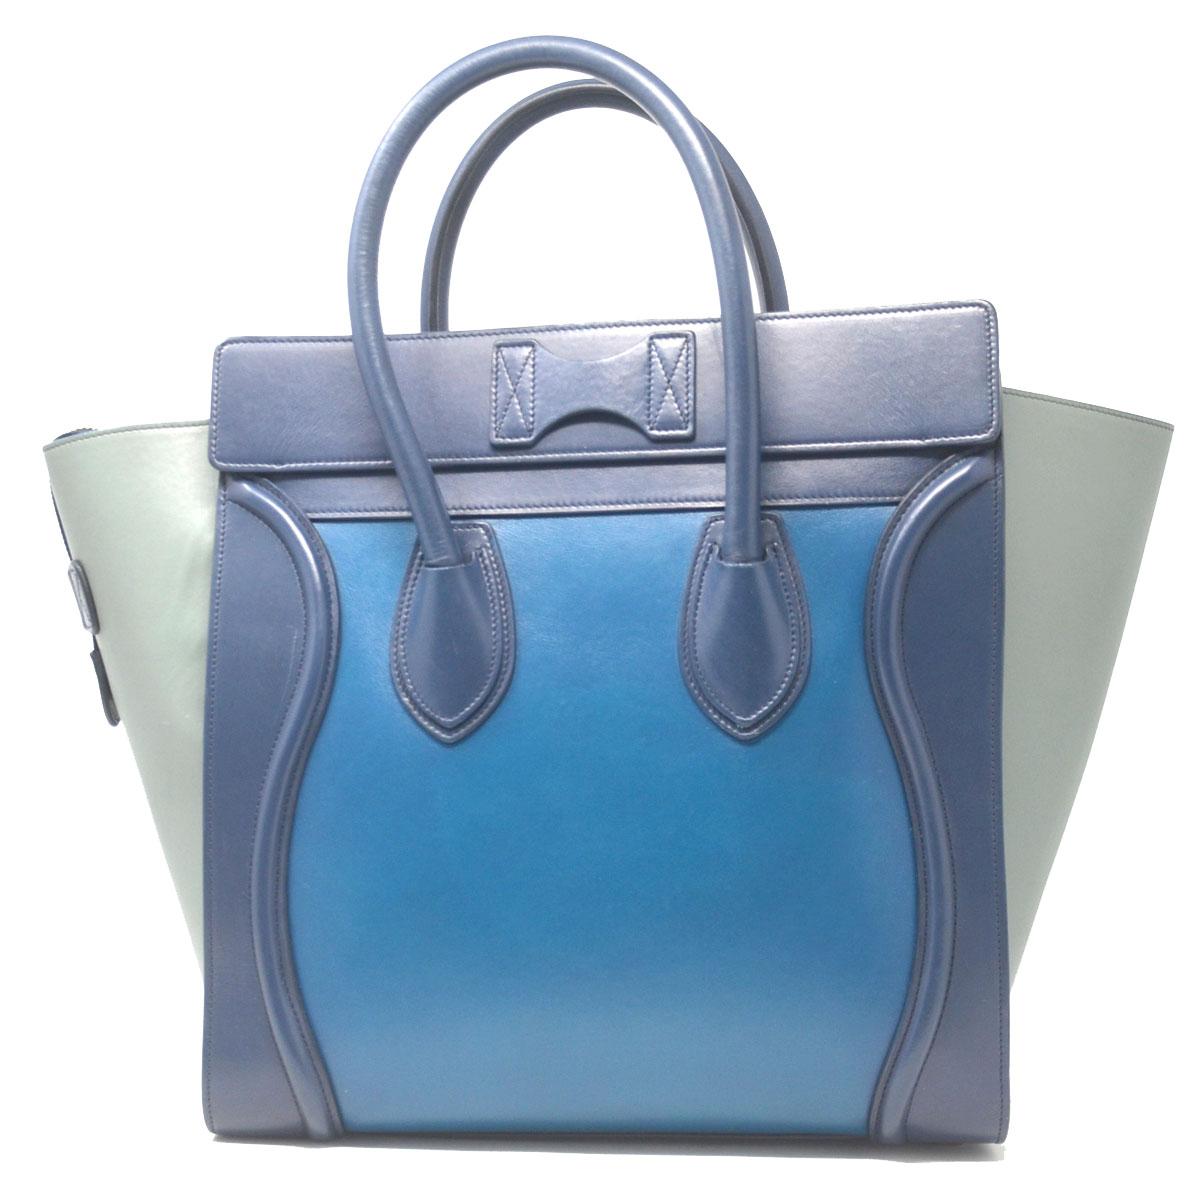 gray tote handbag